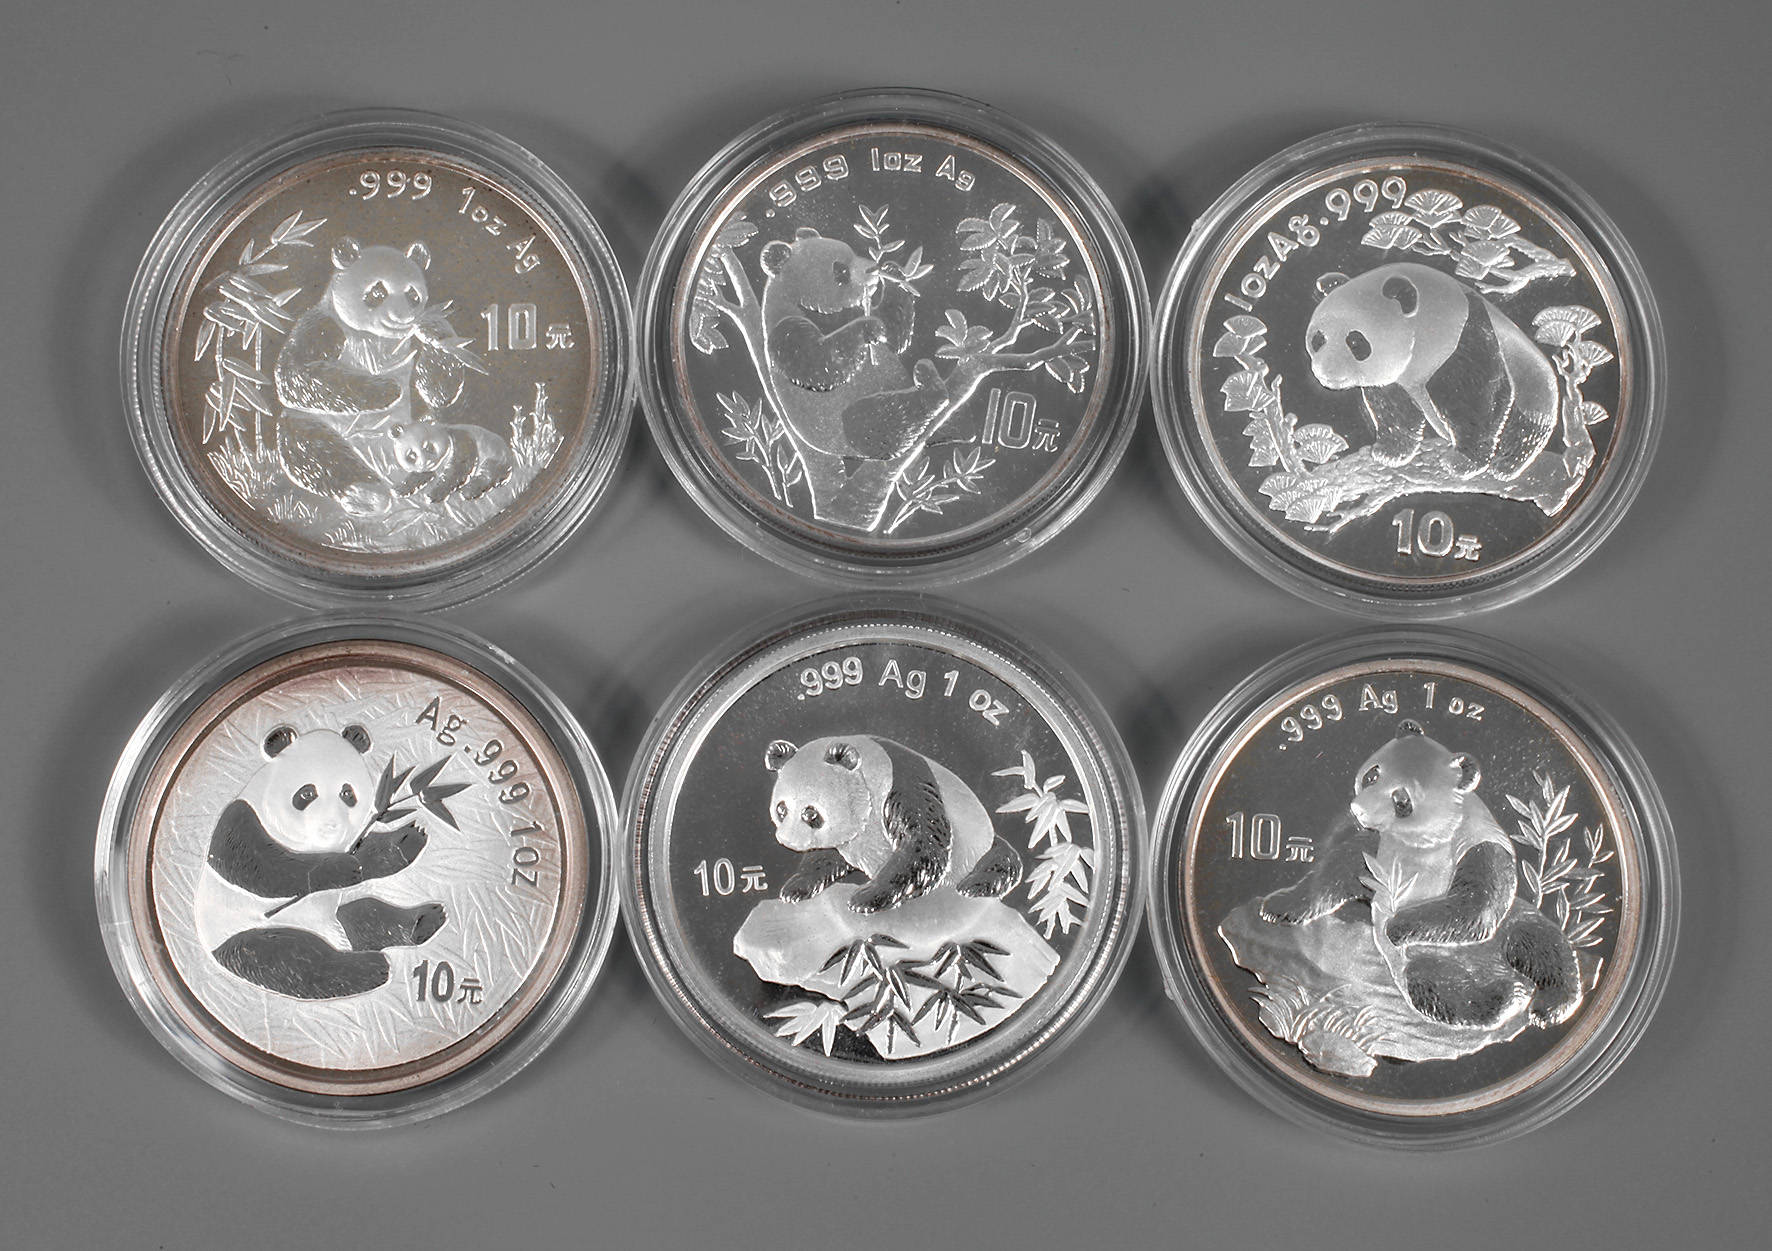 Sechs Silbermünzen China